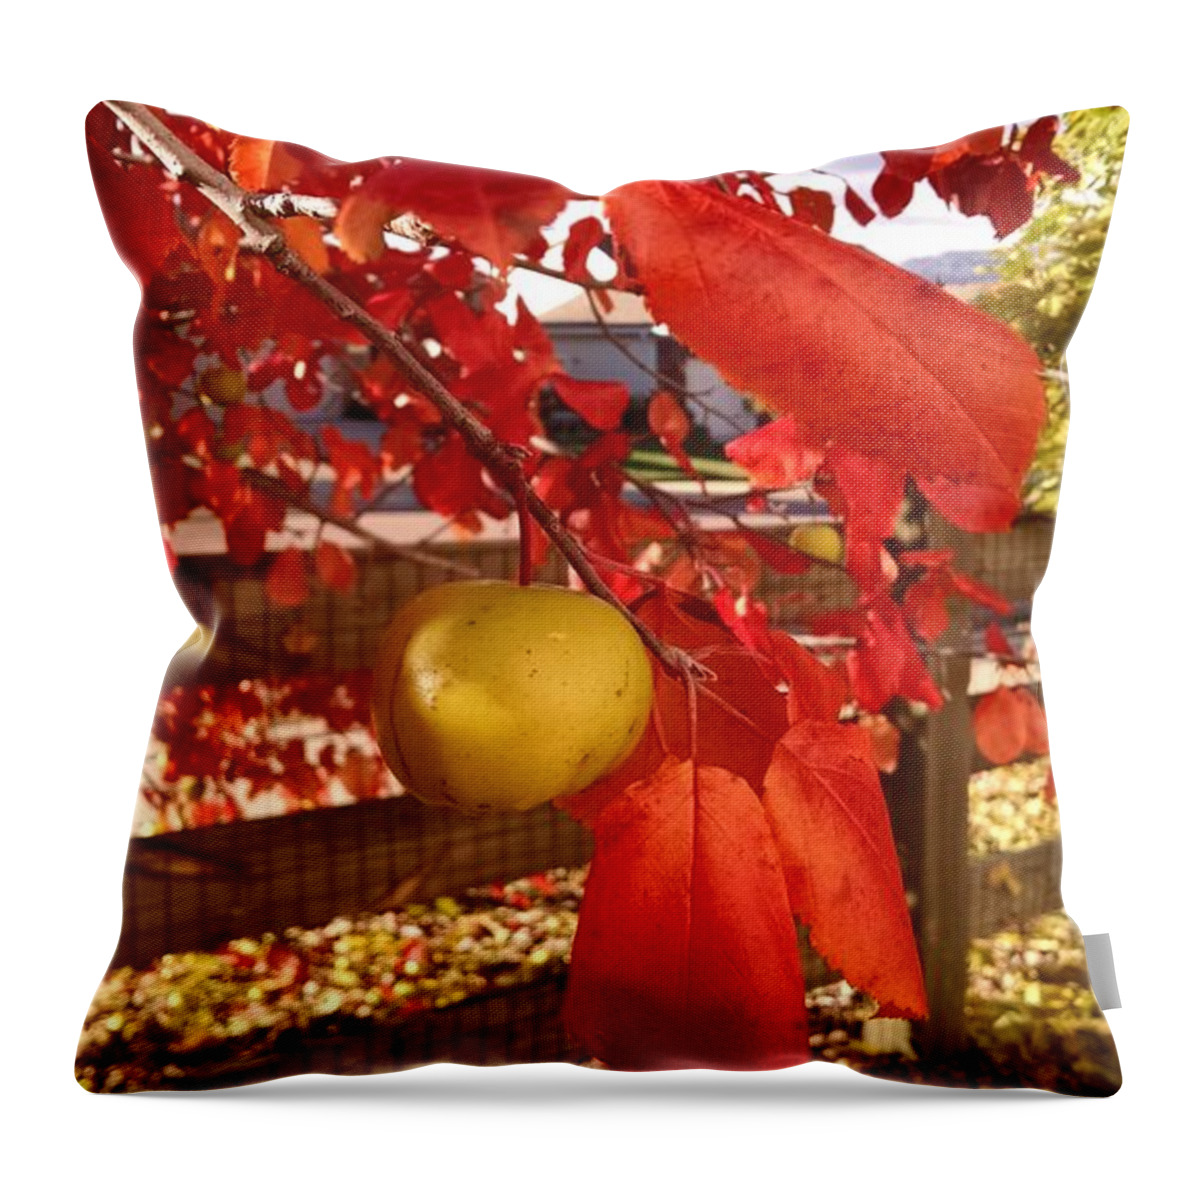 Autumn Glory Throw Pillow featuring the photograph Autumn Glory by Jennifer Forsyth